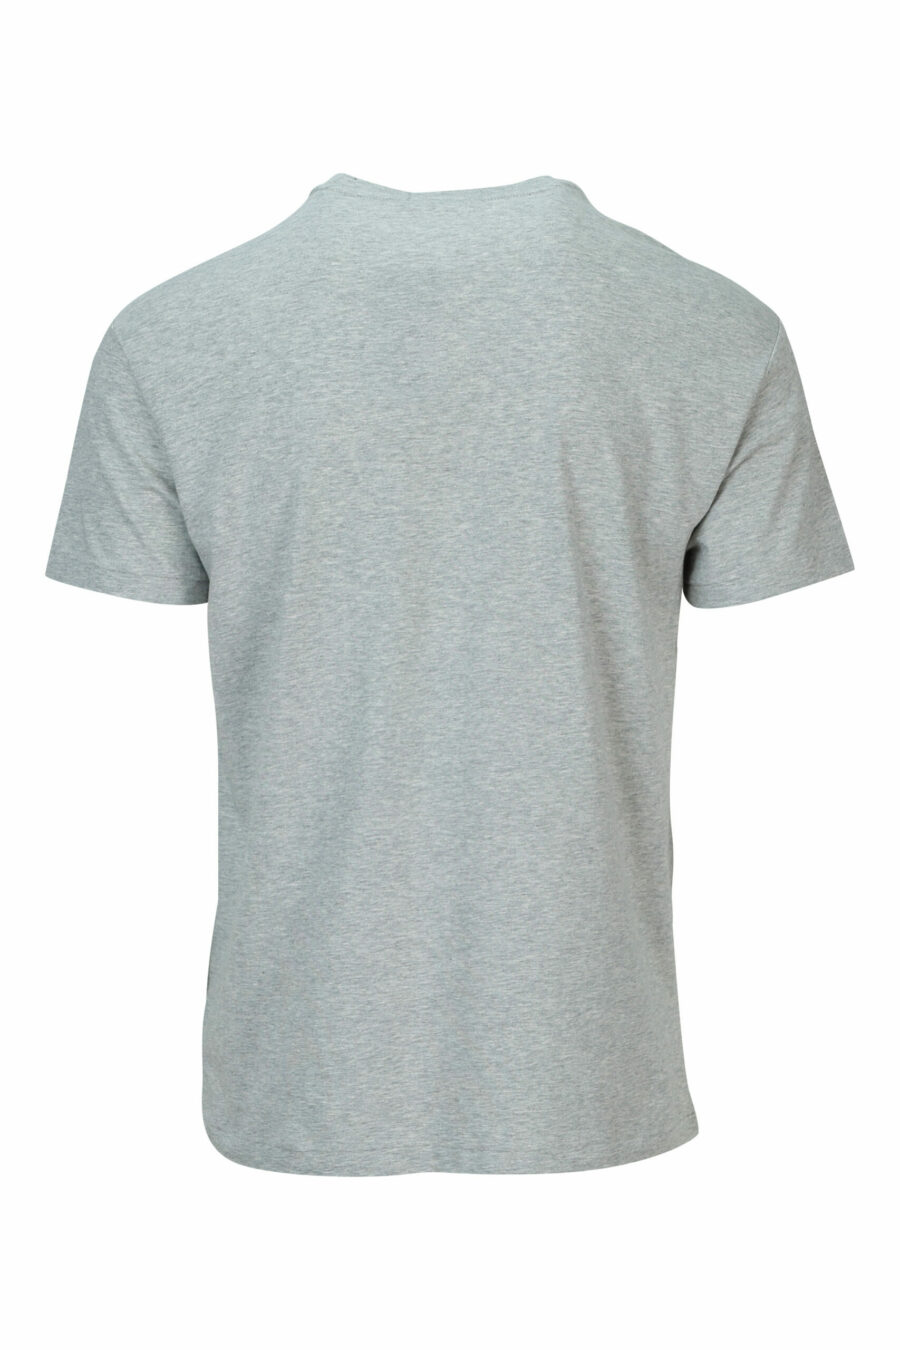 Graues T-Shirt mit Maxilogo "Polobär" Anzug - 3616536211918 1 skaliert